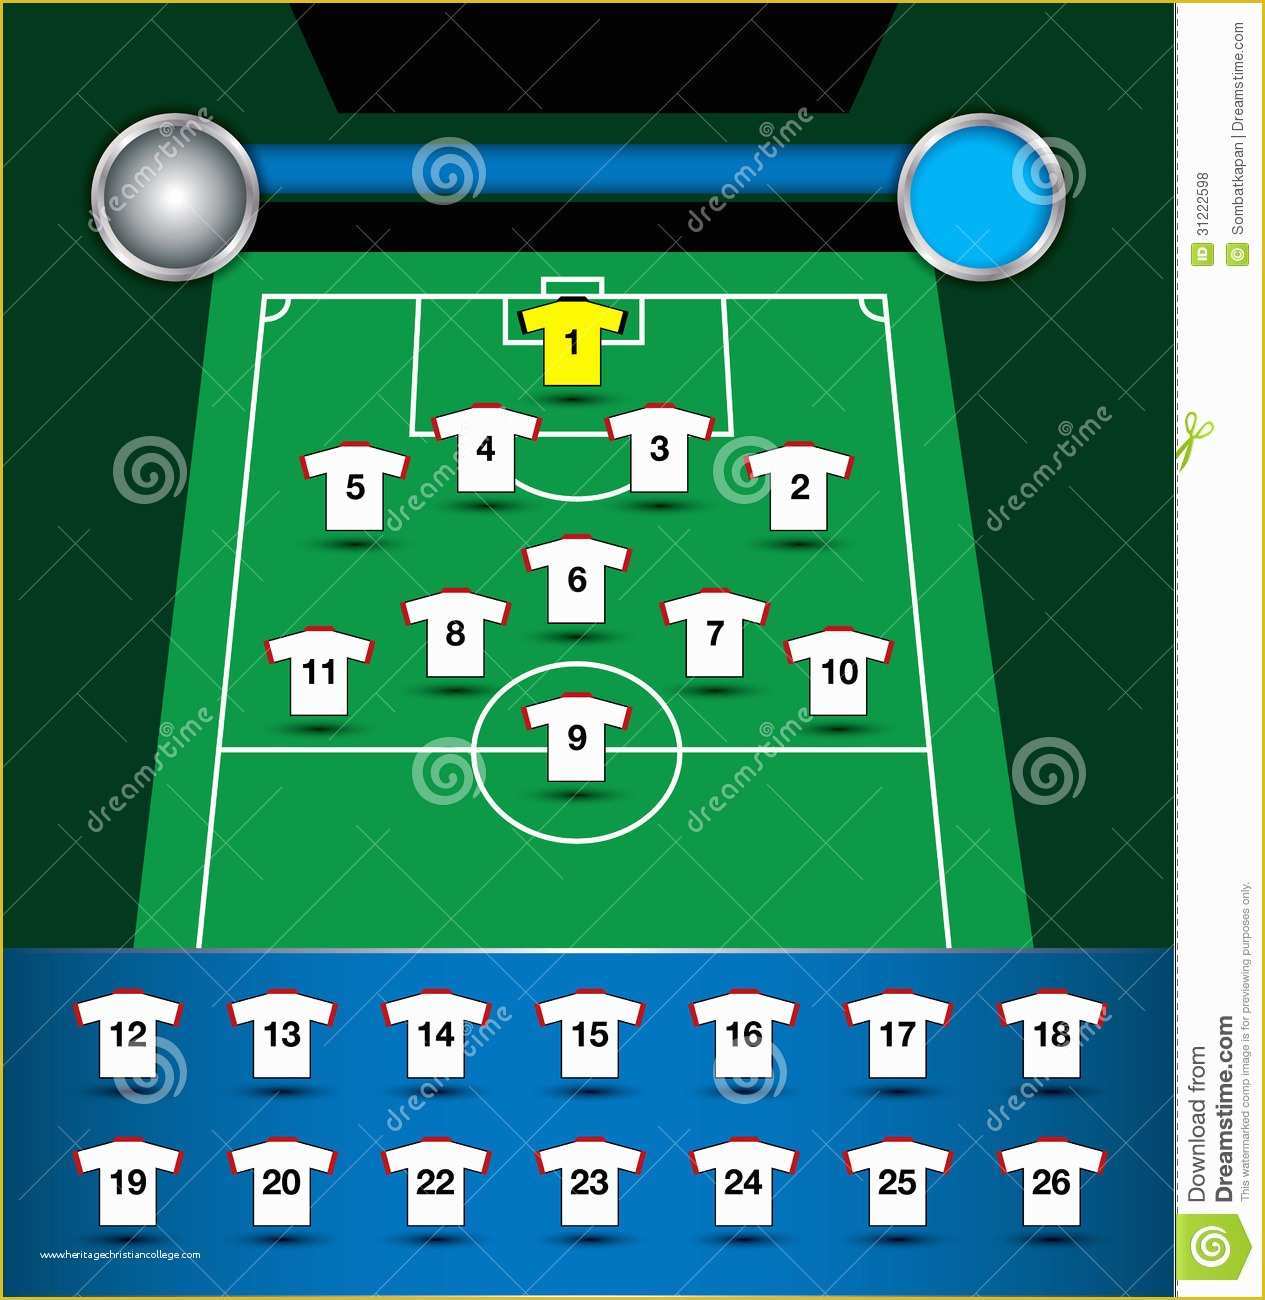 Free soccer Team Photo Templates Of soccer Team Plan Vector Stock Vector Illustration Of